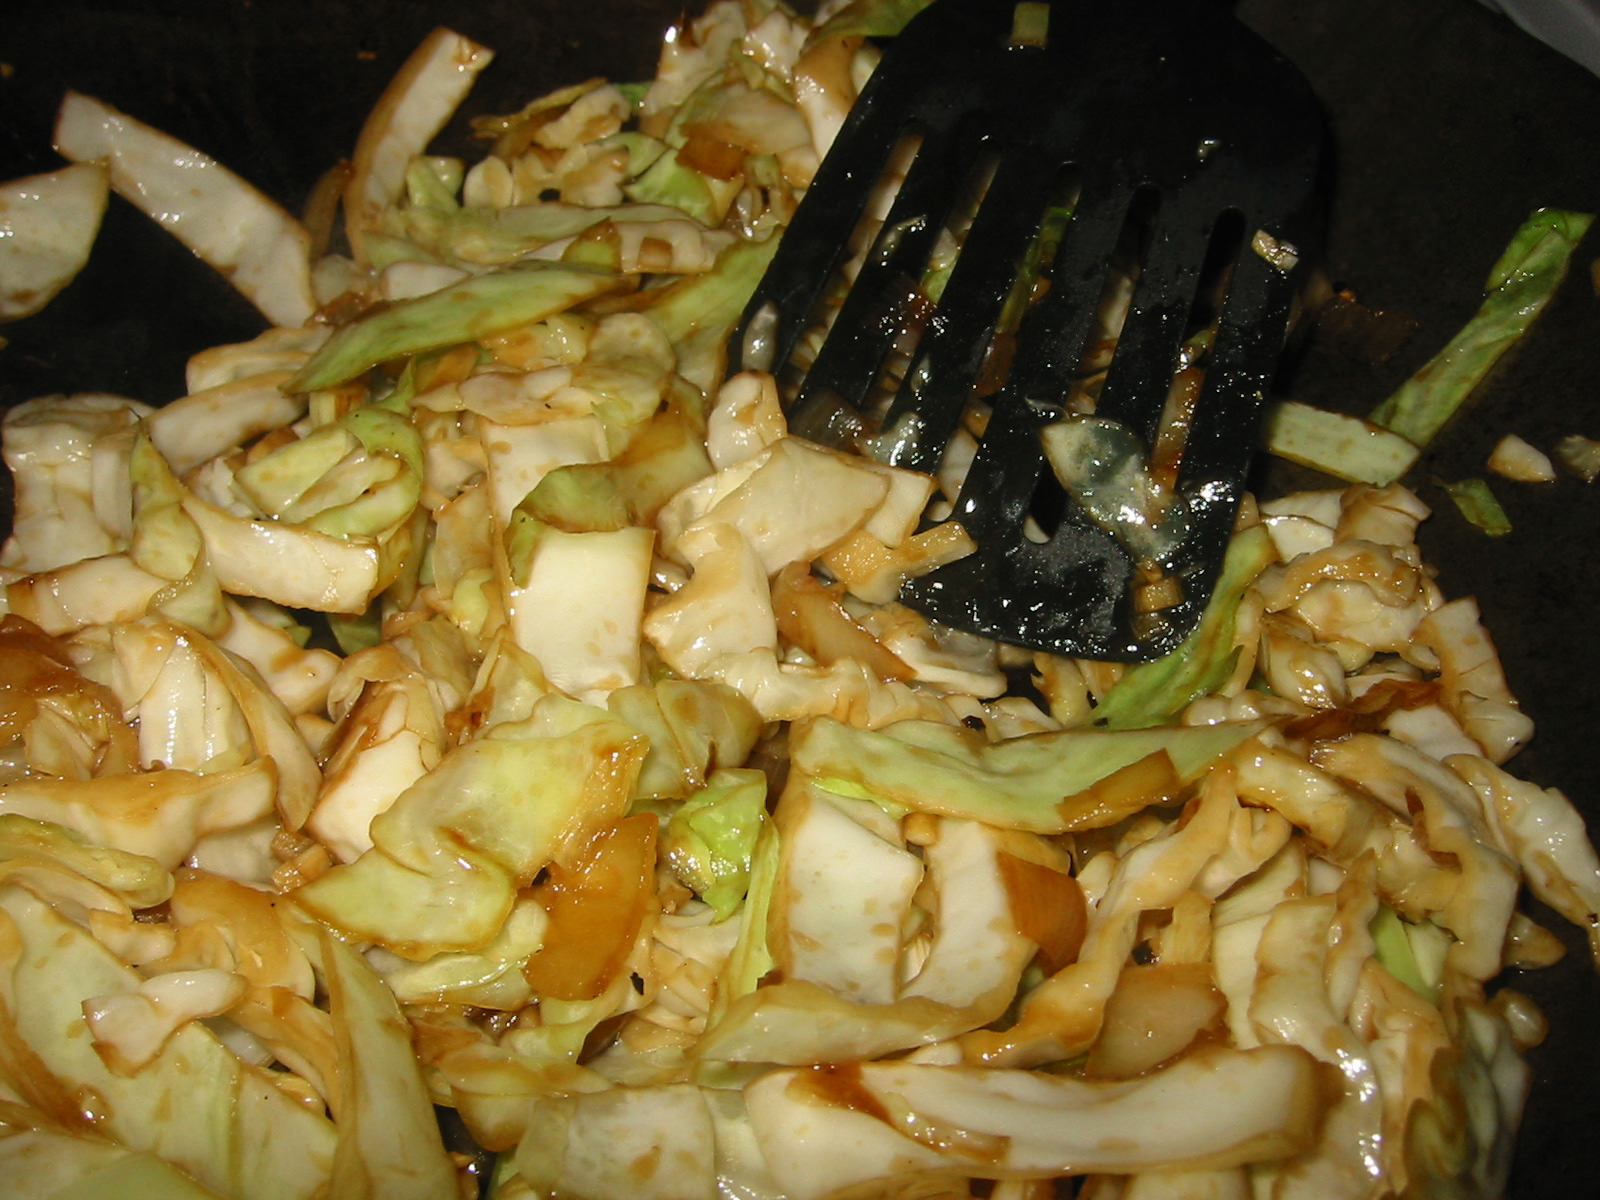 Stir-fried cabbage